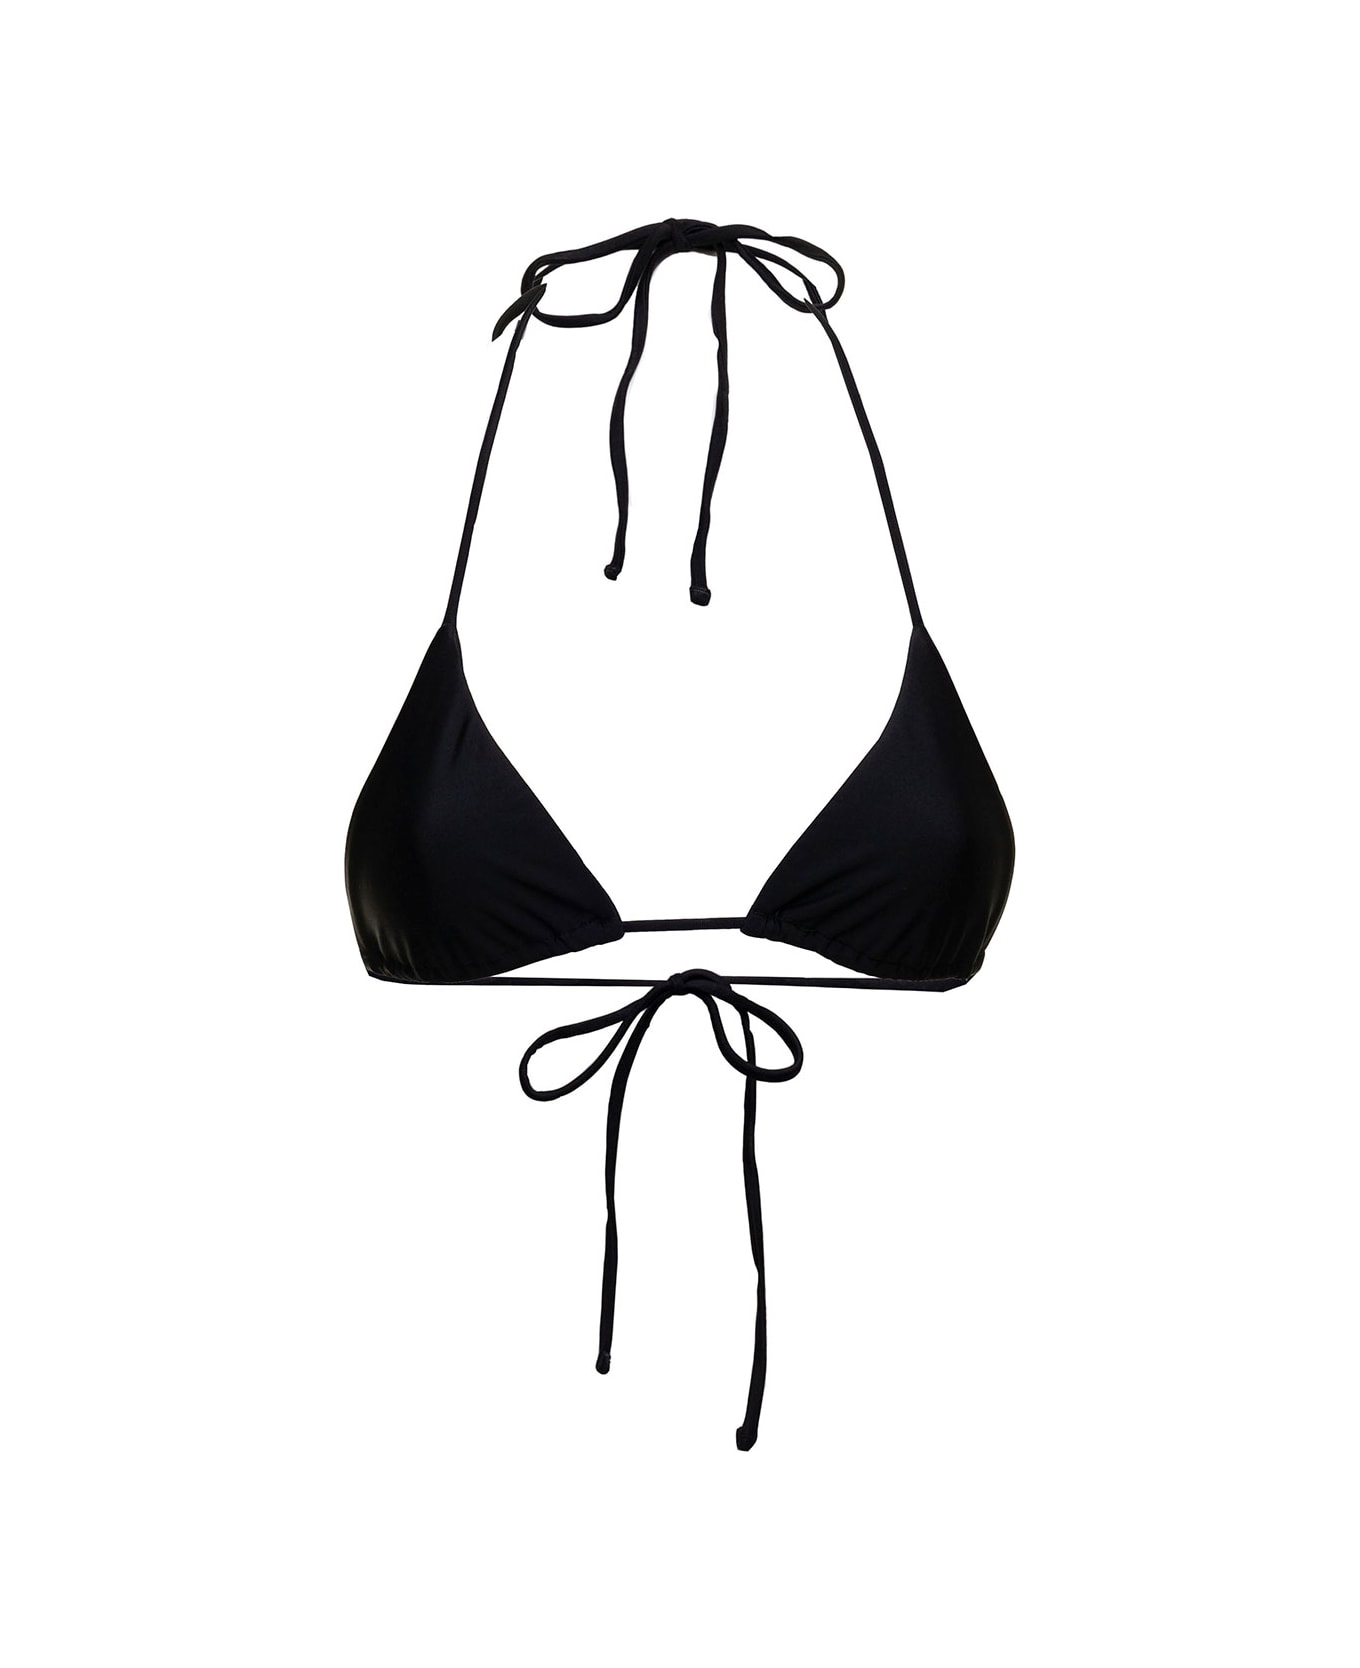 MATTEAU Woman's Tringolar Stretch Fabric Bikini Top - Black 水着